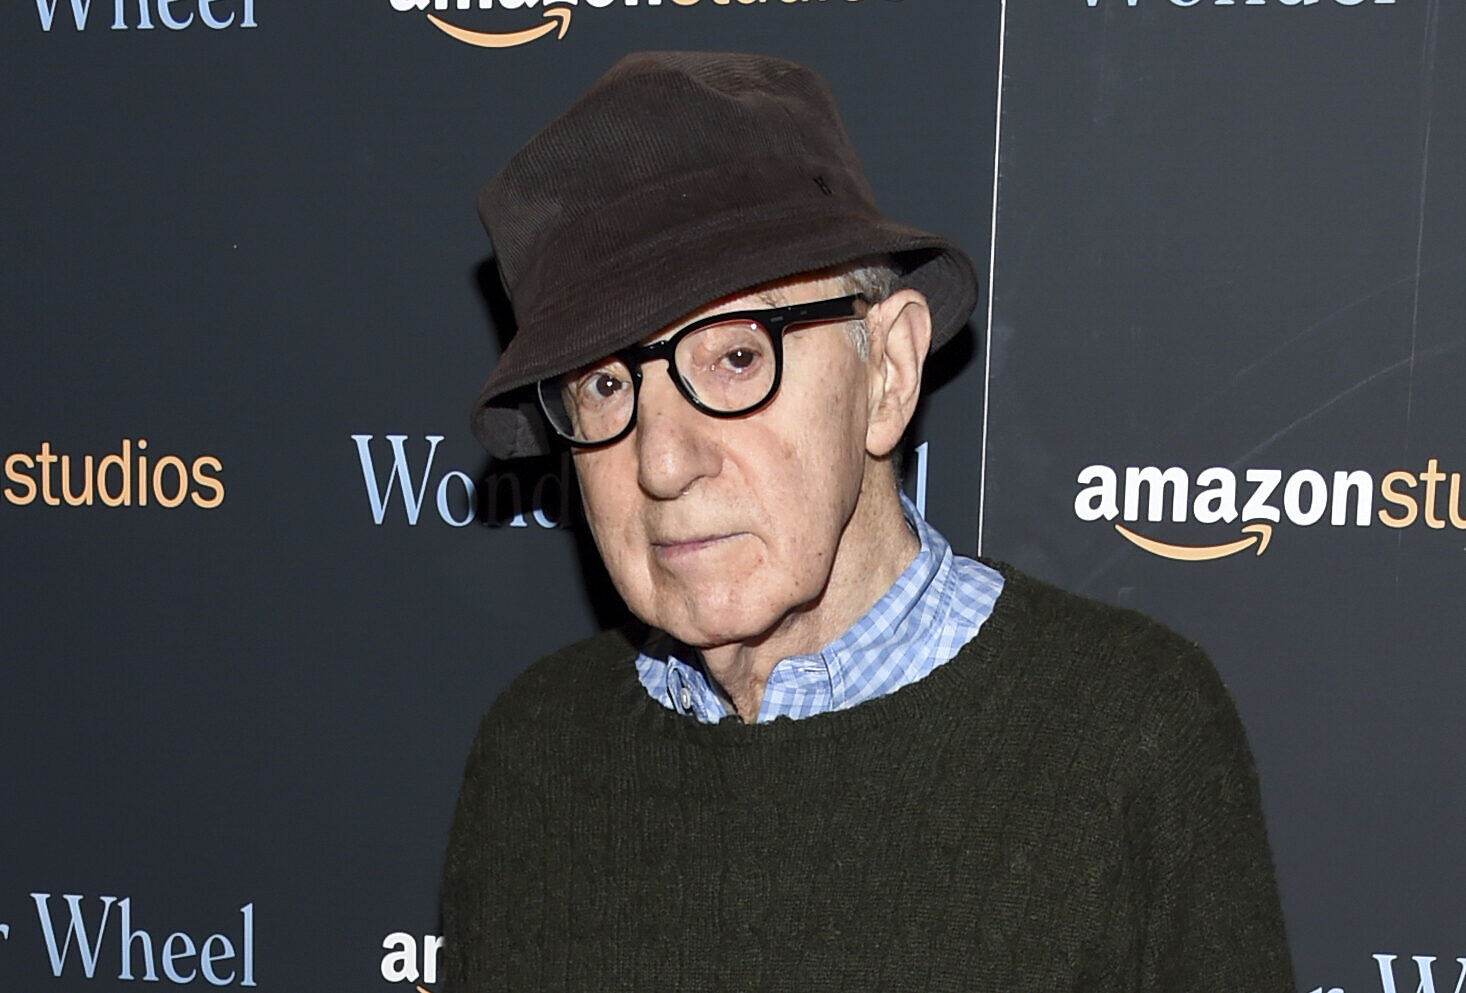 Longrumored Woody Allen memoir coming in April The Times of Israel